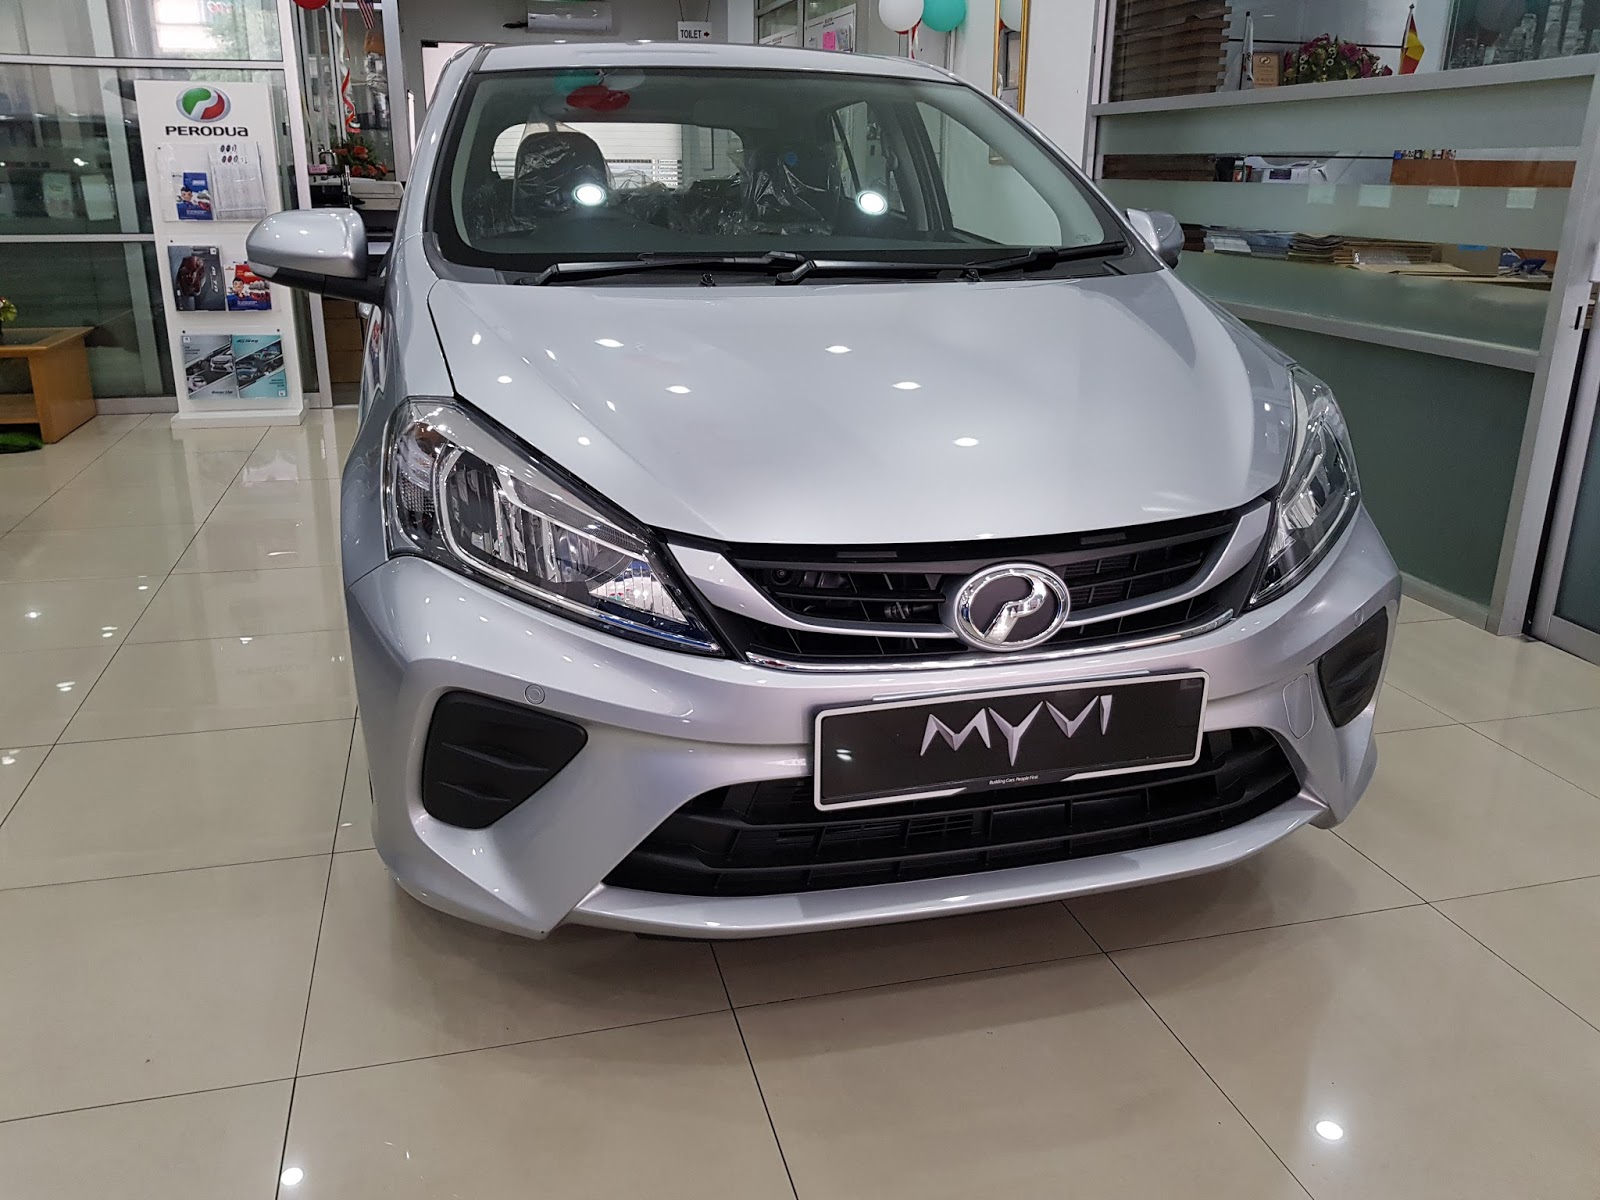 PROMOSI PERODUA MALAYSIA: Harga Myvi 1.3 G (Auto) Standard 2019